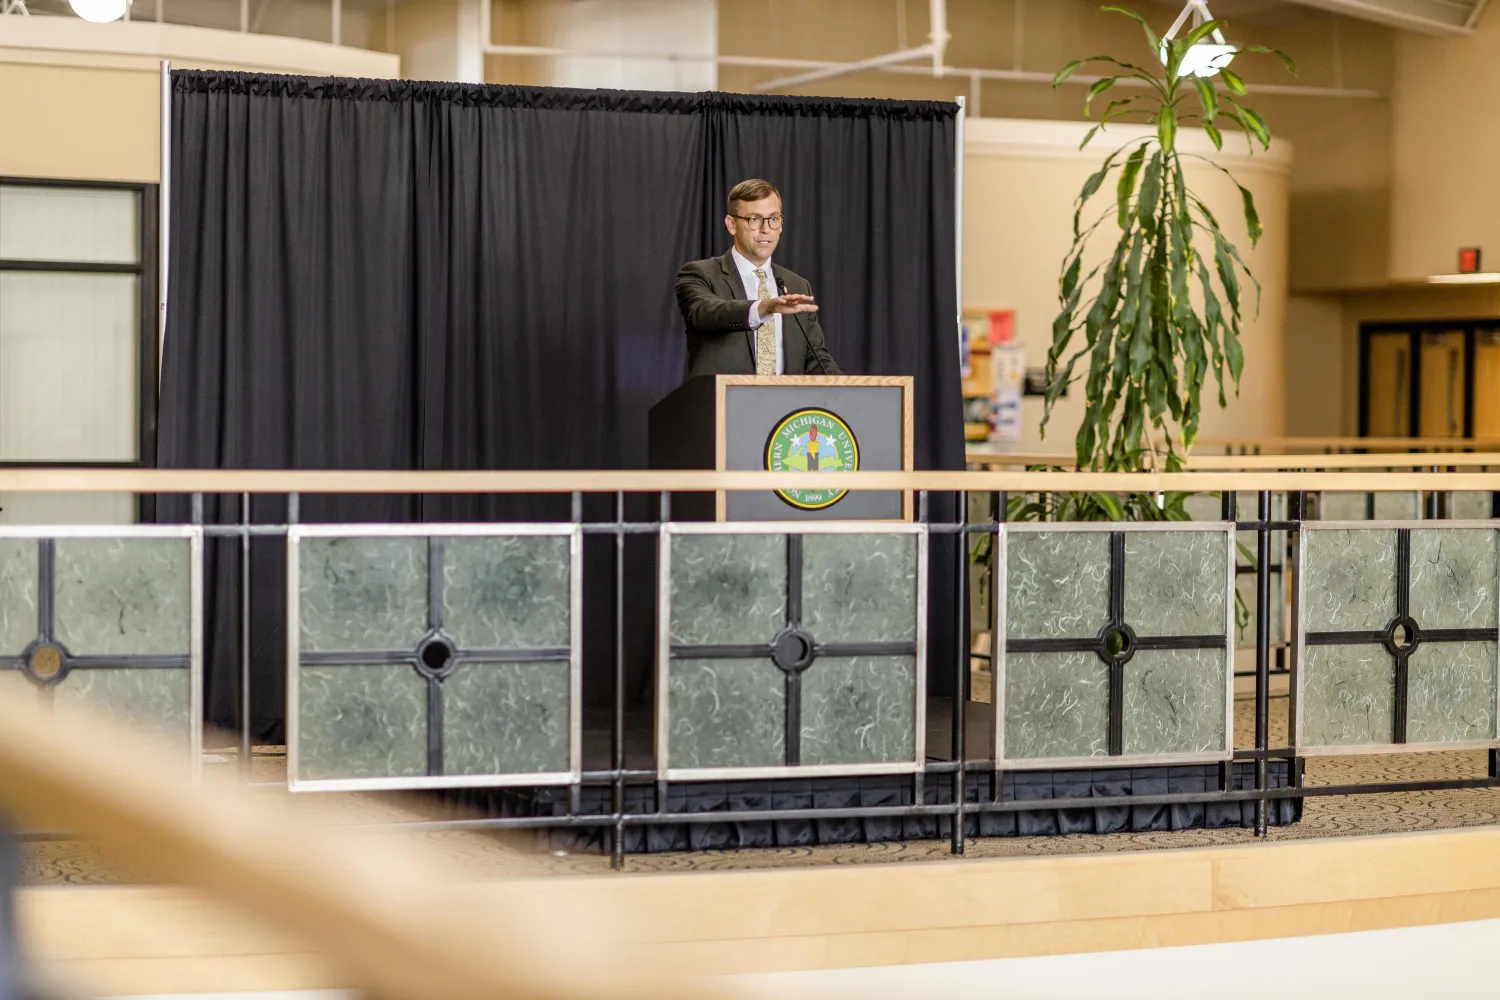 President Tessman speaking while standing at a podium